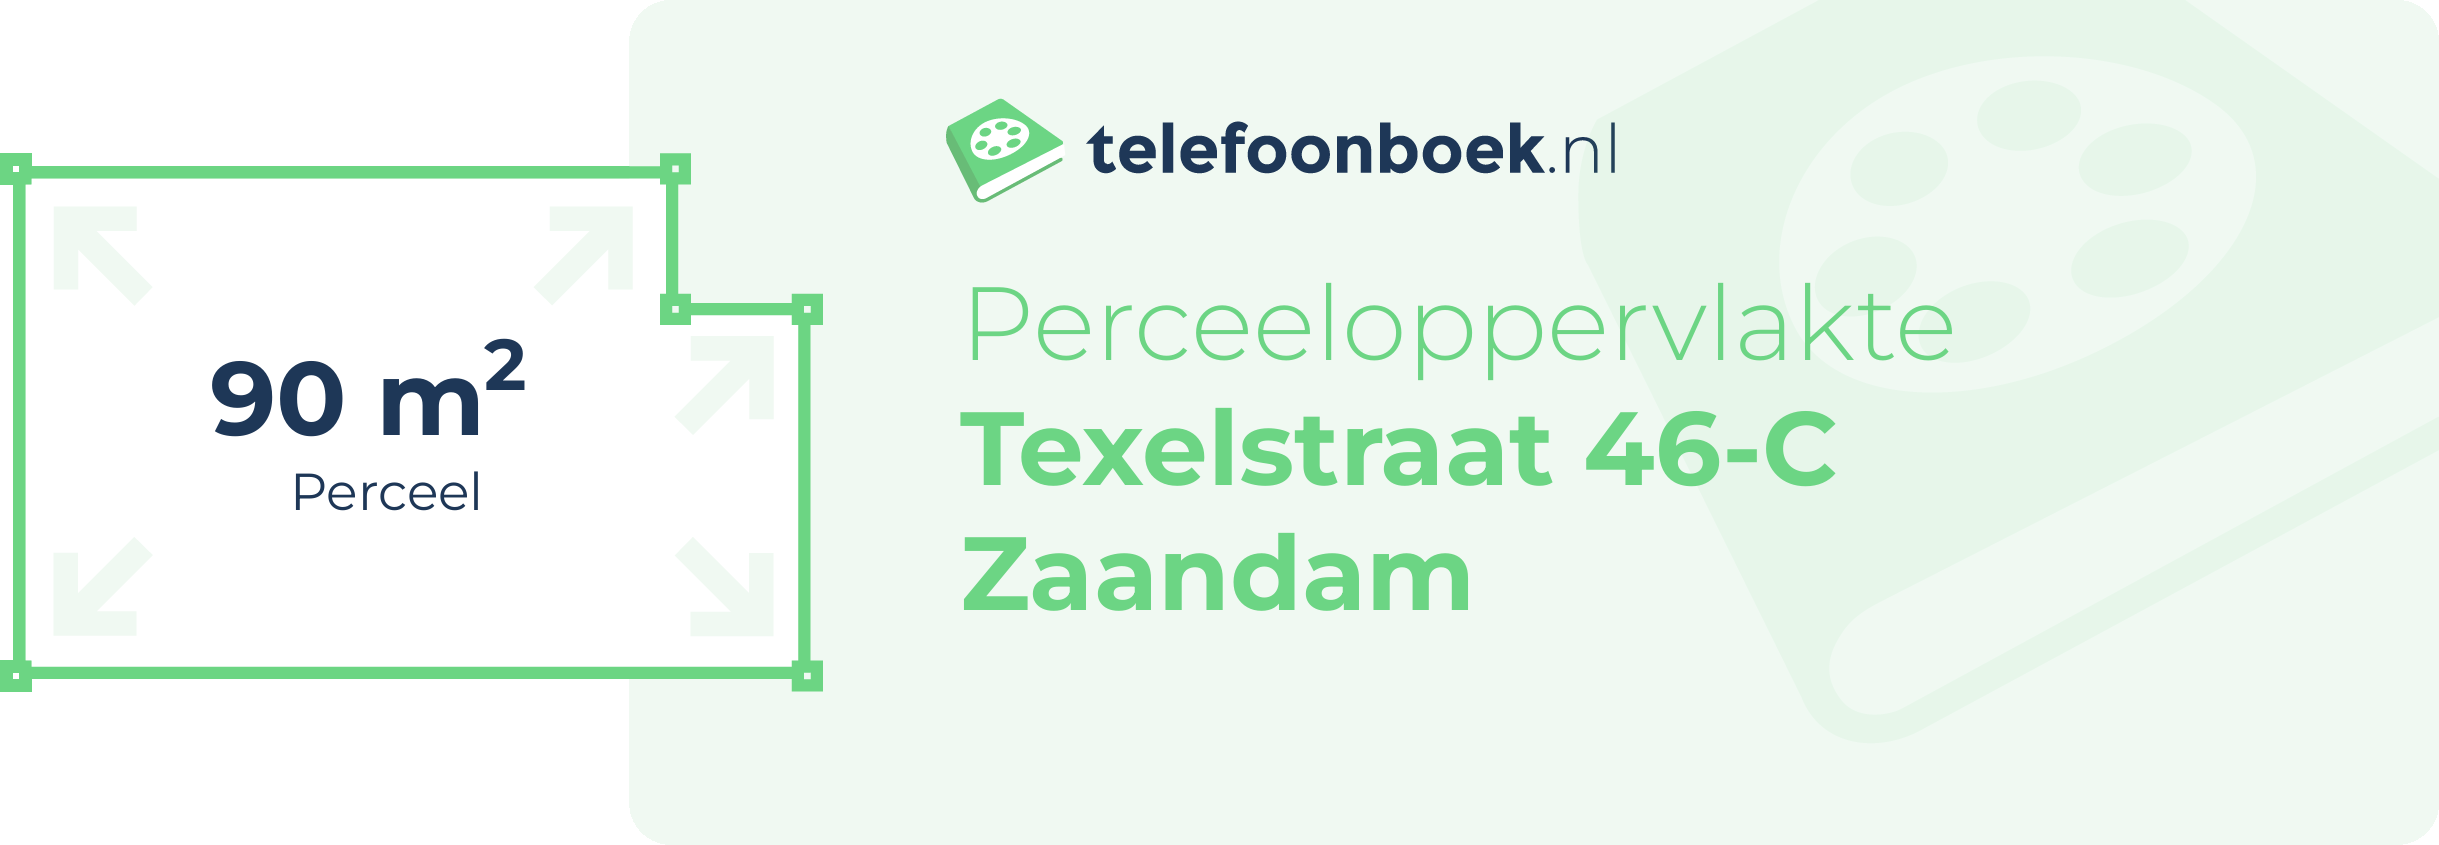 Perceeloppervlakte Texelstraat 46-C Zaandam